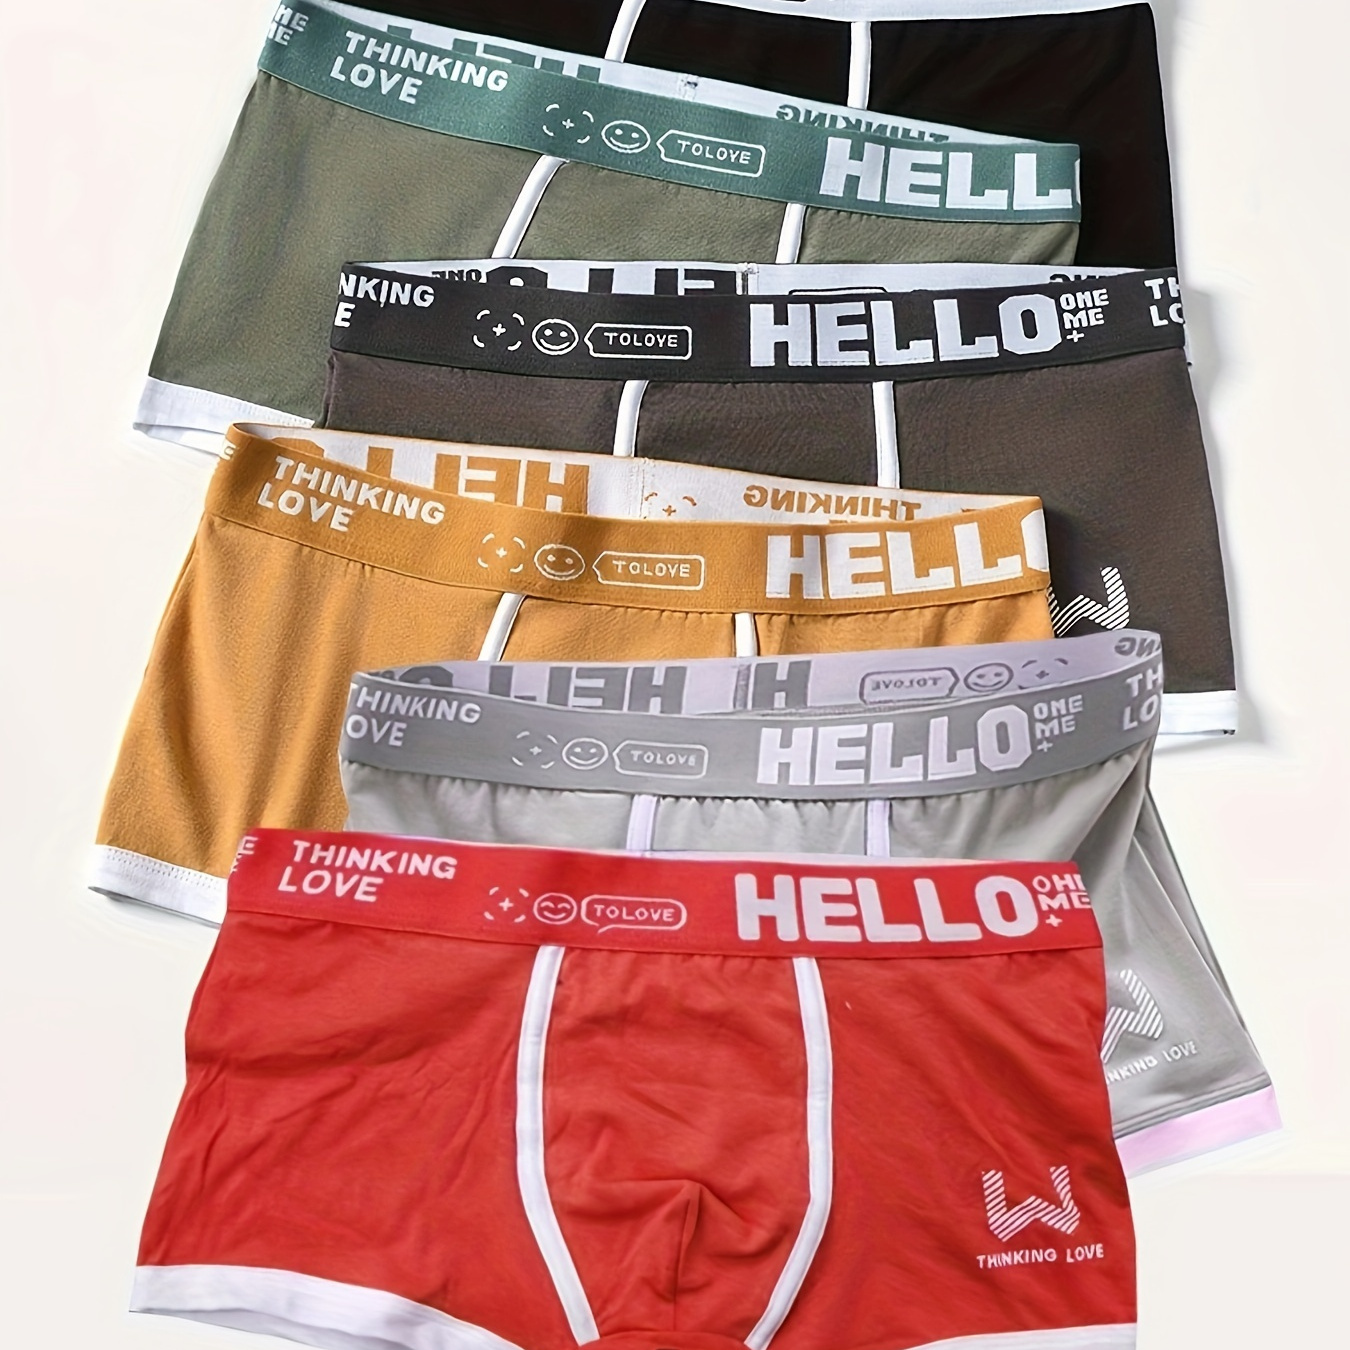 

6pcs Men's Underwear, 'hello' Print Fashion Breathable Comfy Stretchy Boxer Briefs Shorts, Sports Shorts